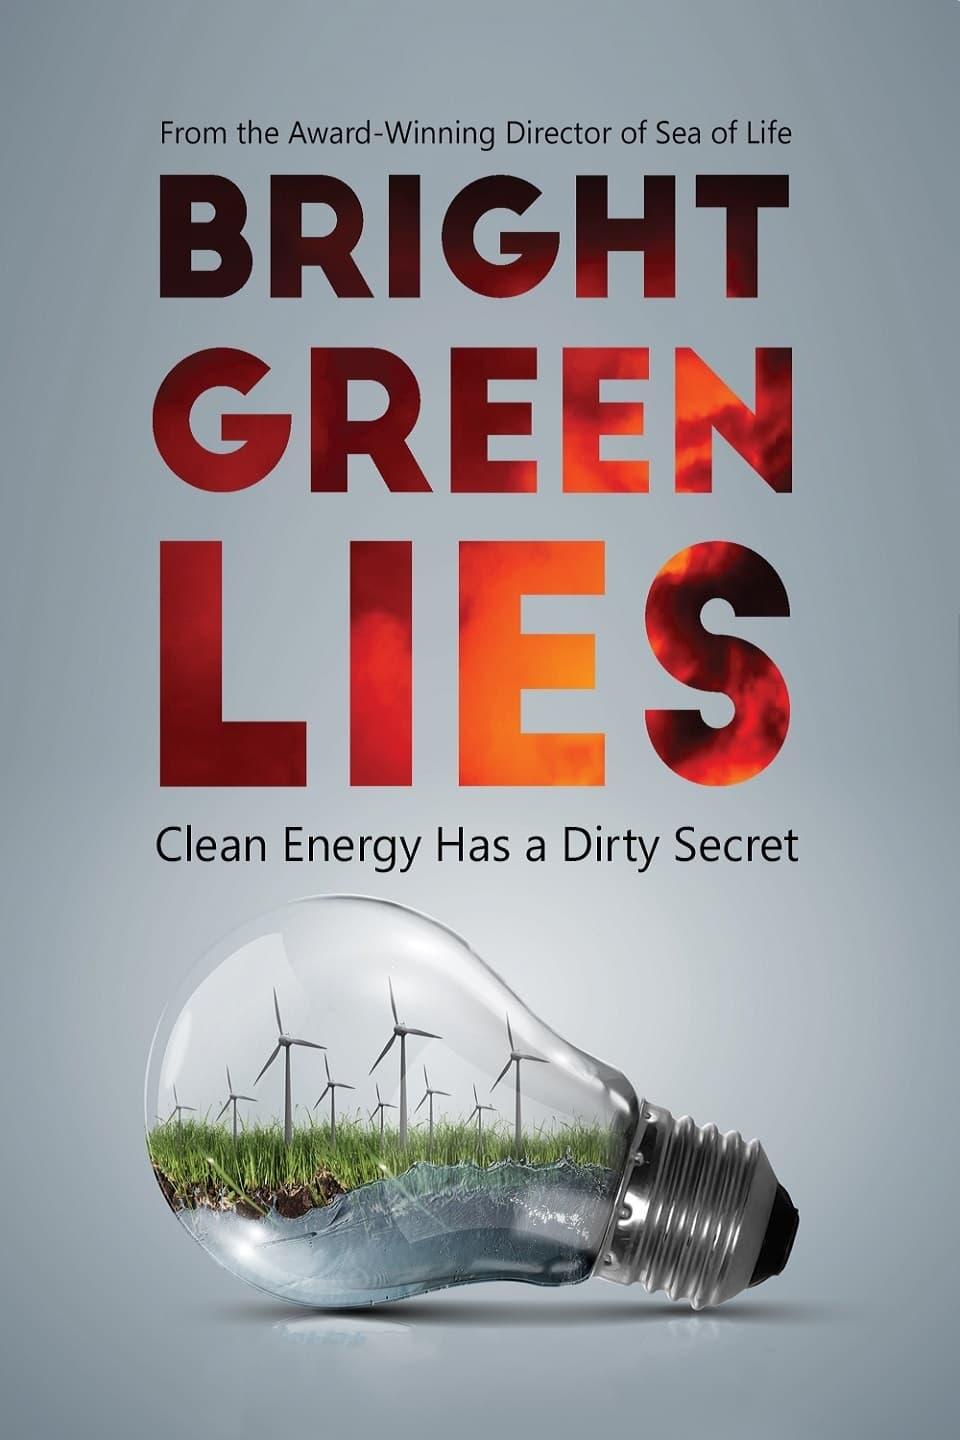 Bright Green Lies poster